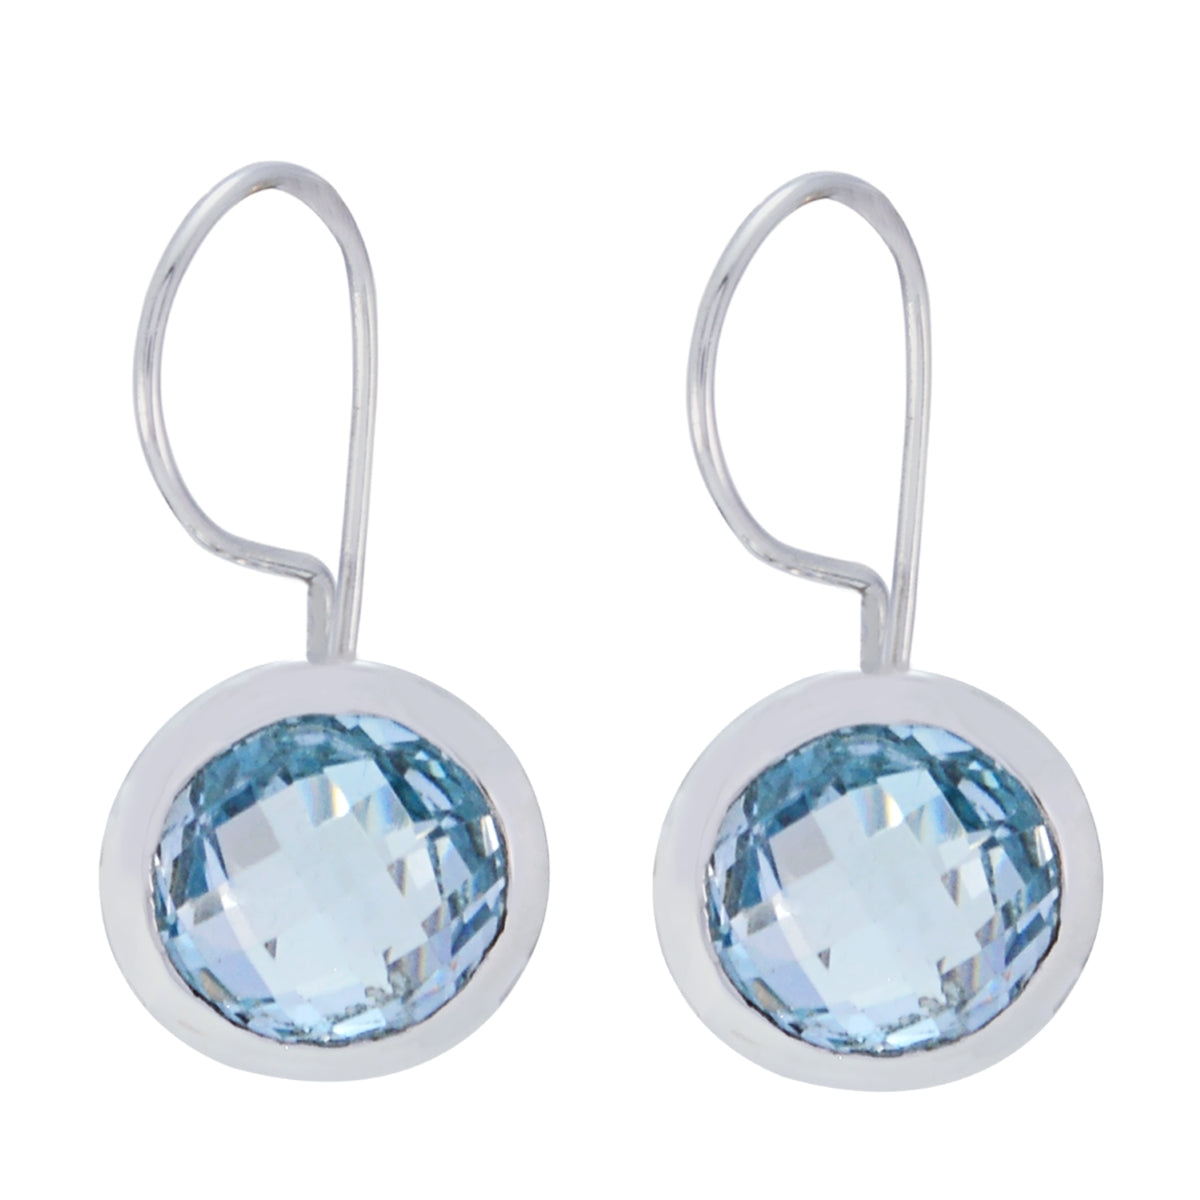 Riyo Genuine Gems round Checker Blue Topaz Silver Earrings gift for black Friday